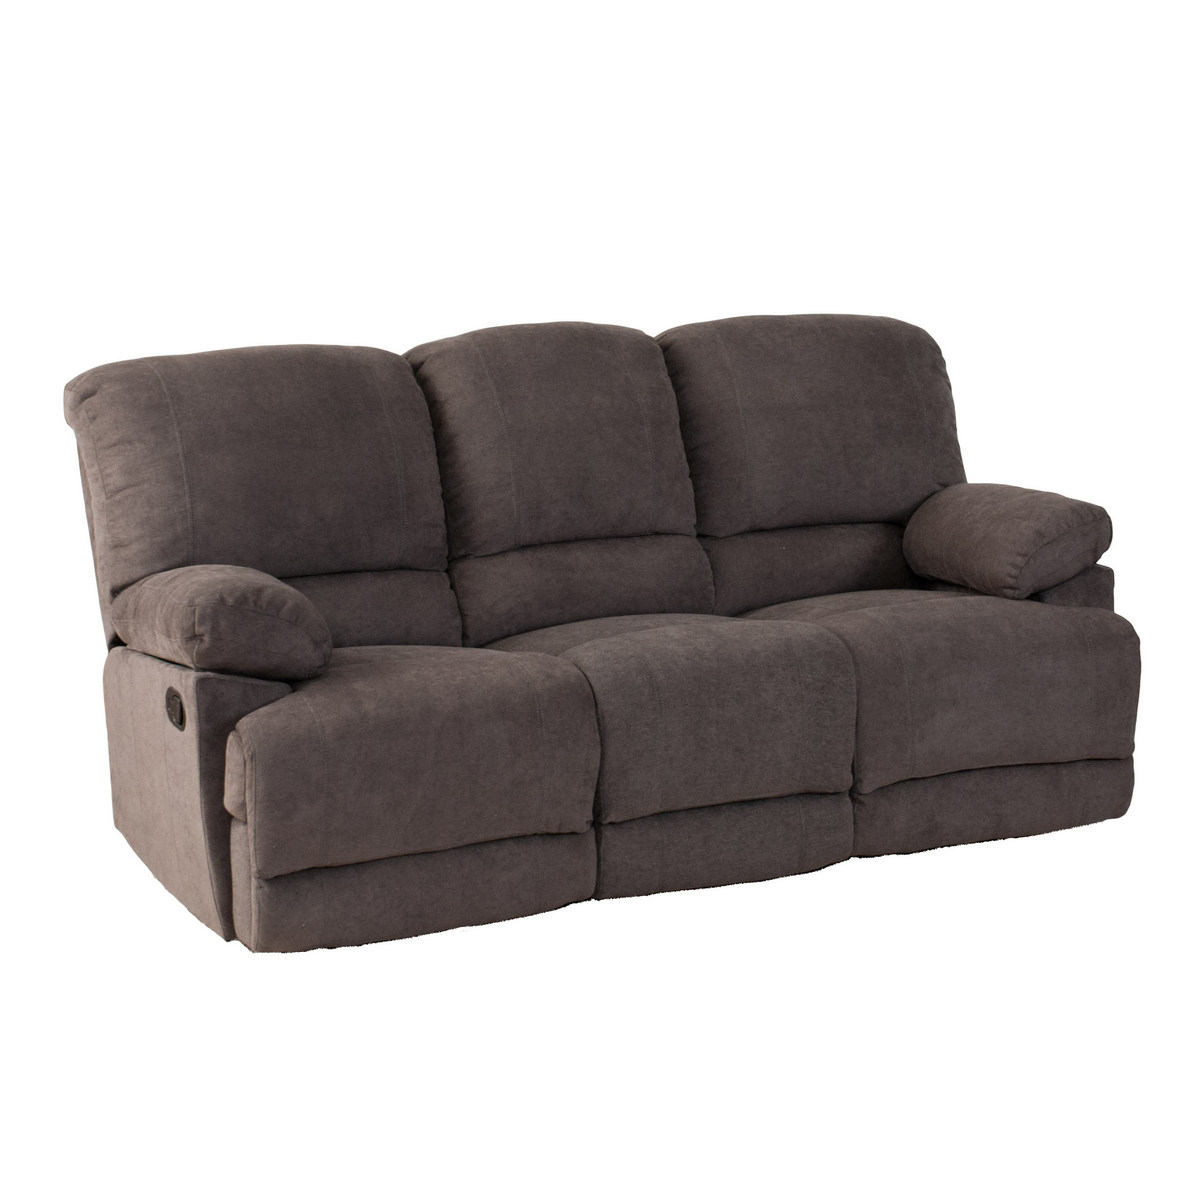 Corliving Lzy-331-s Lea Grey Chenille Fabric Reclining Sofa